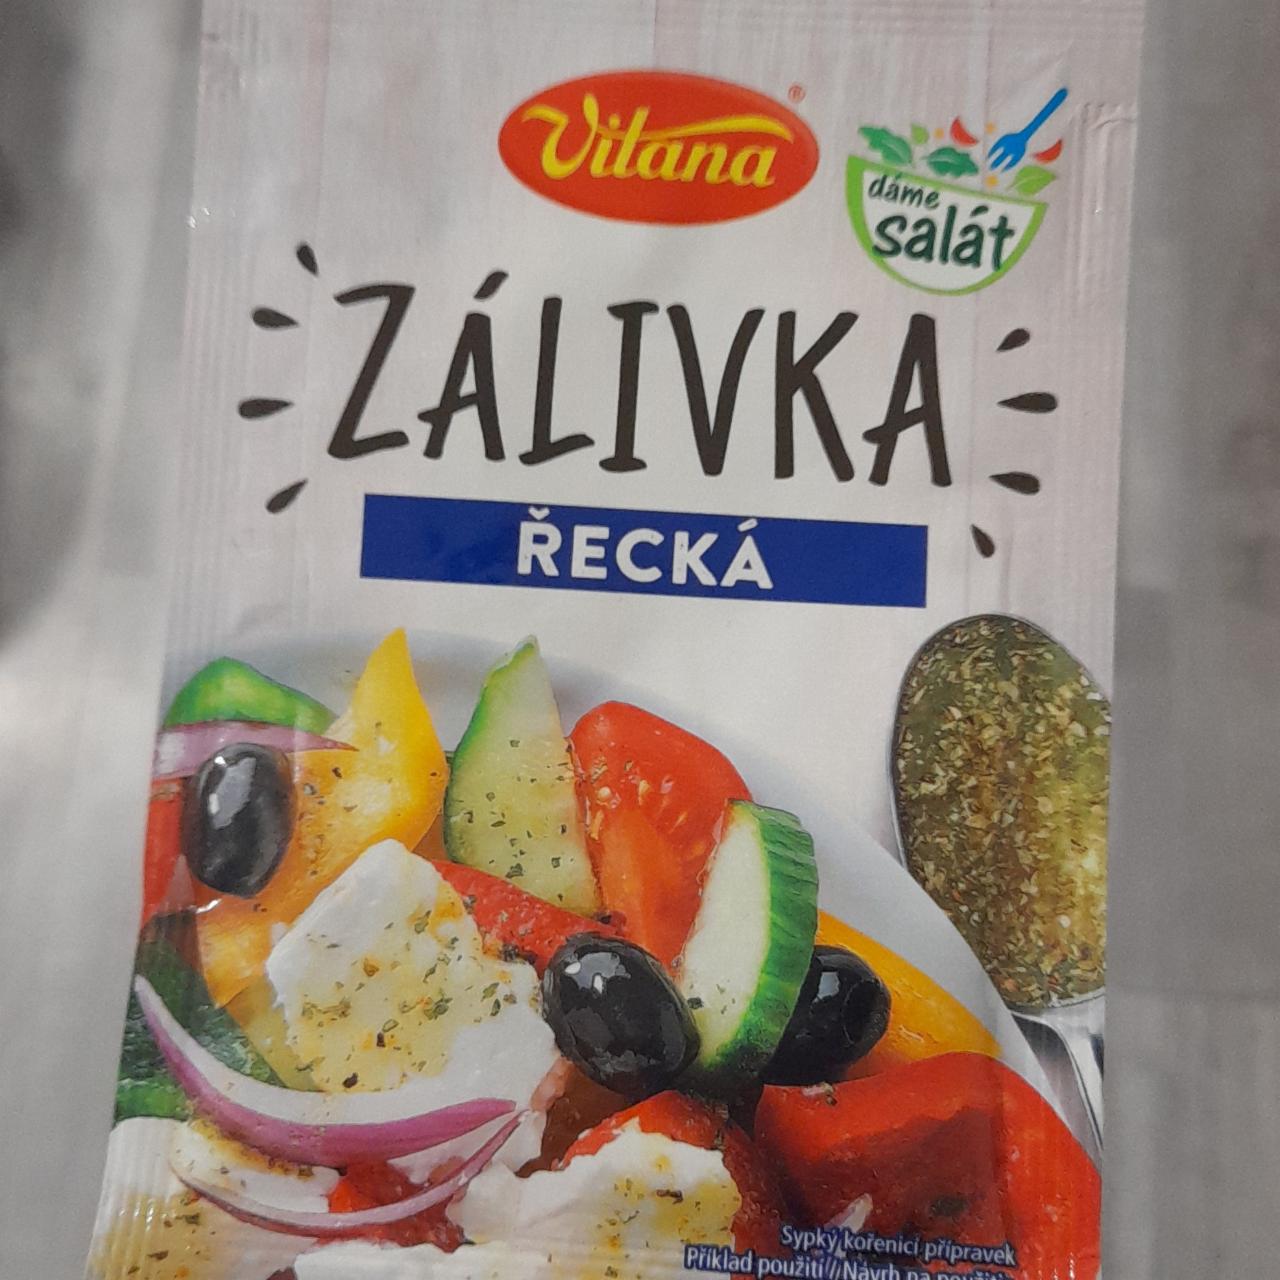 Фото - Заправка до салату Zalivka Recka Vitana